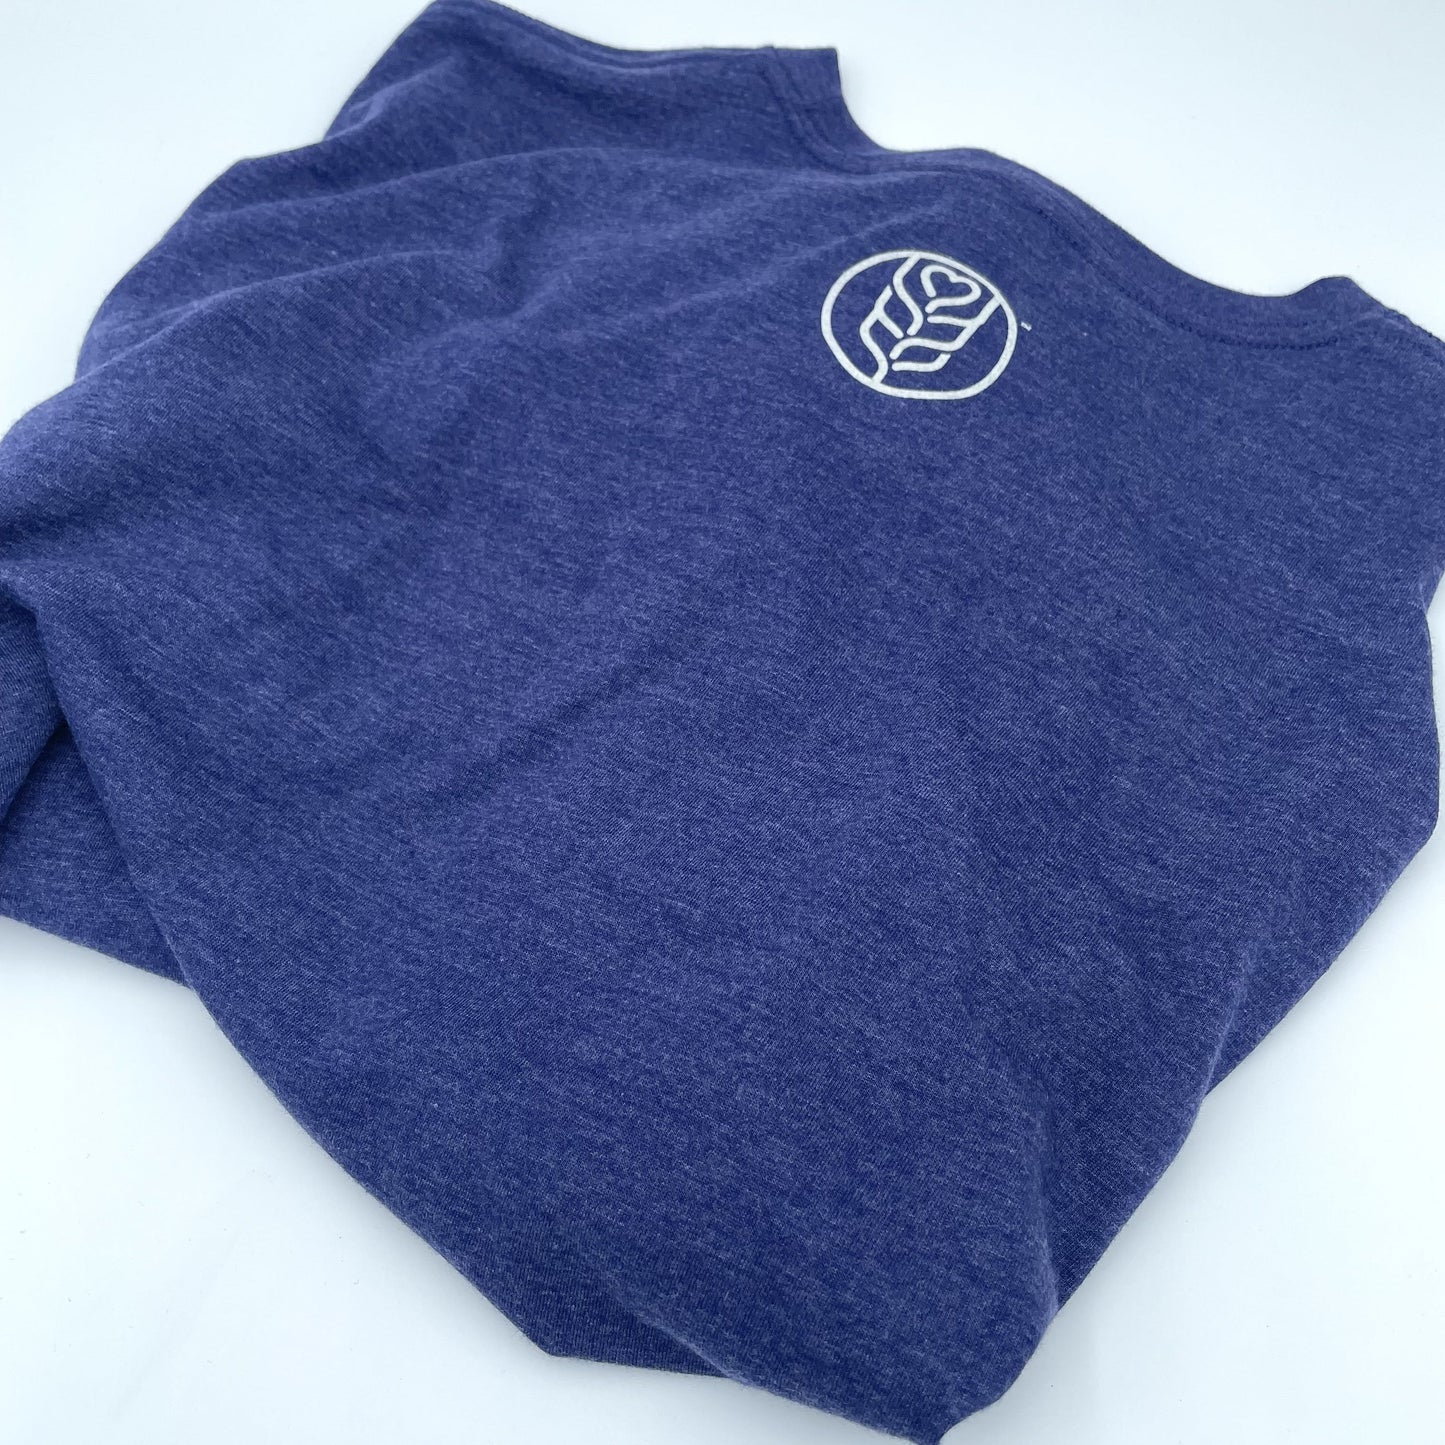 Storm Shirt with Parchment Logos - Unisex